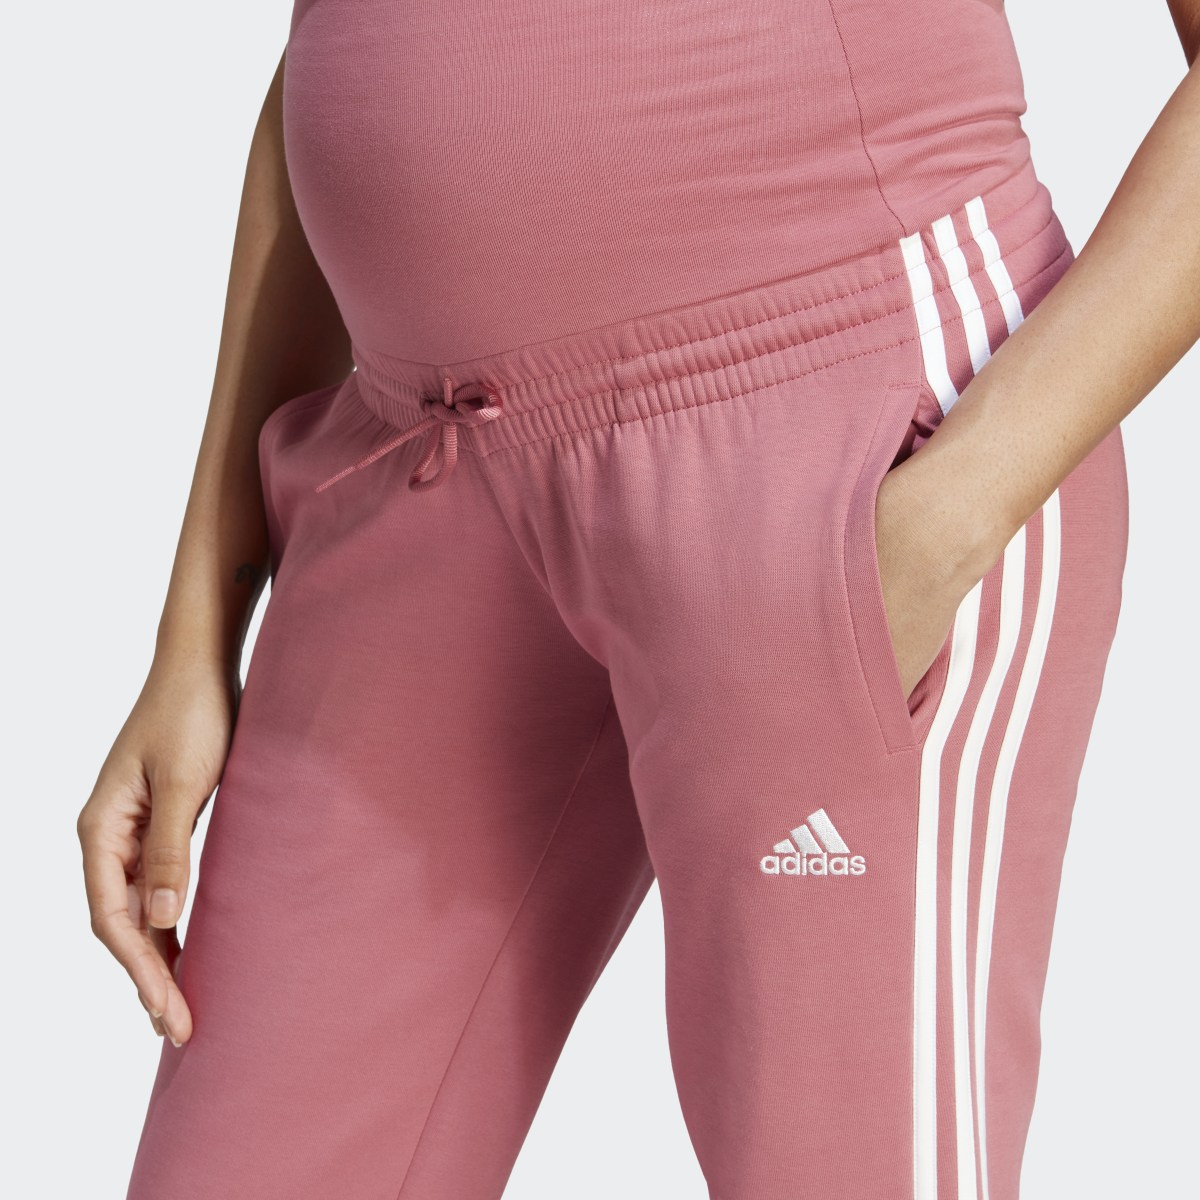 Adidas Maternity Tracksuit Bottoms. 5